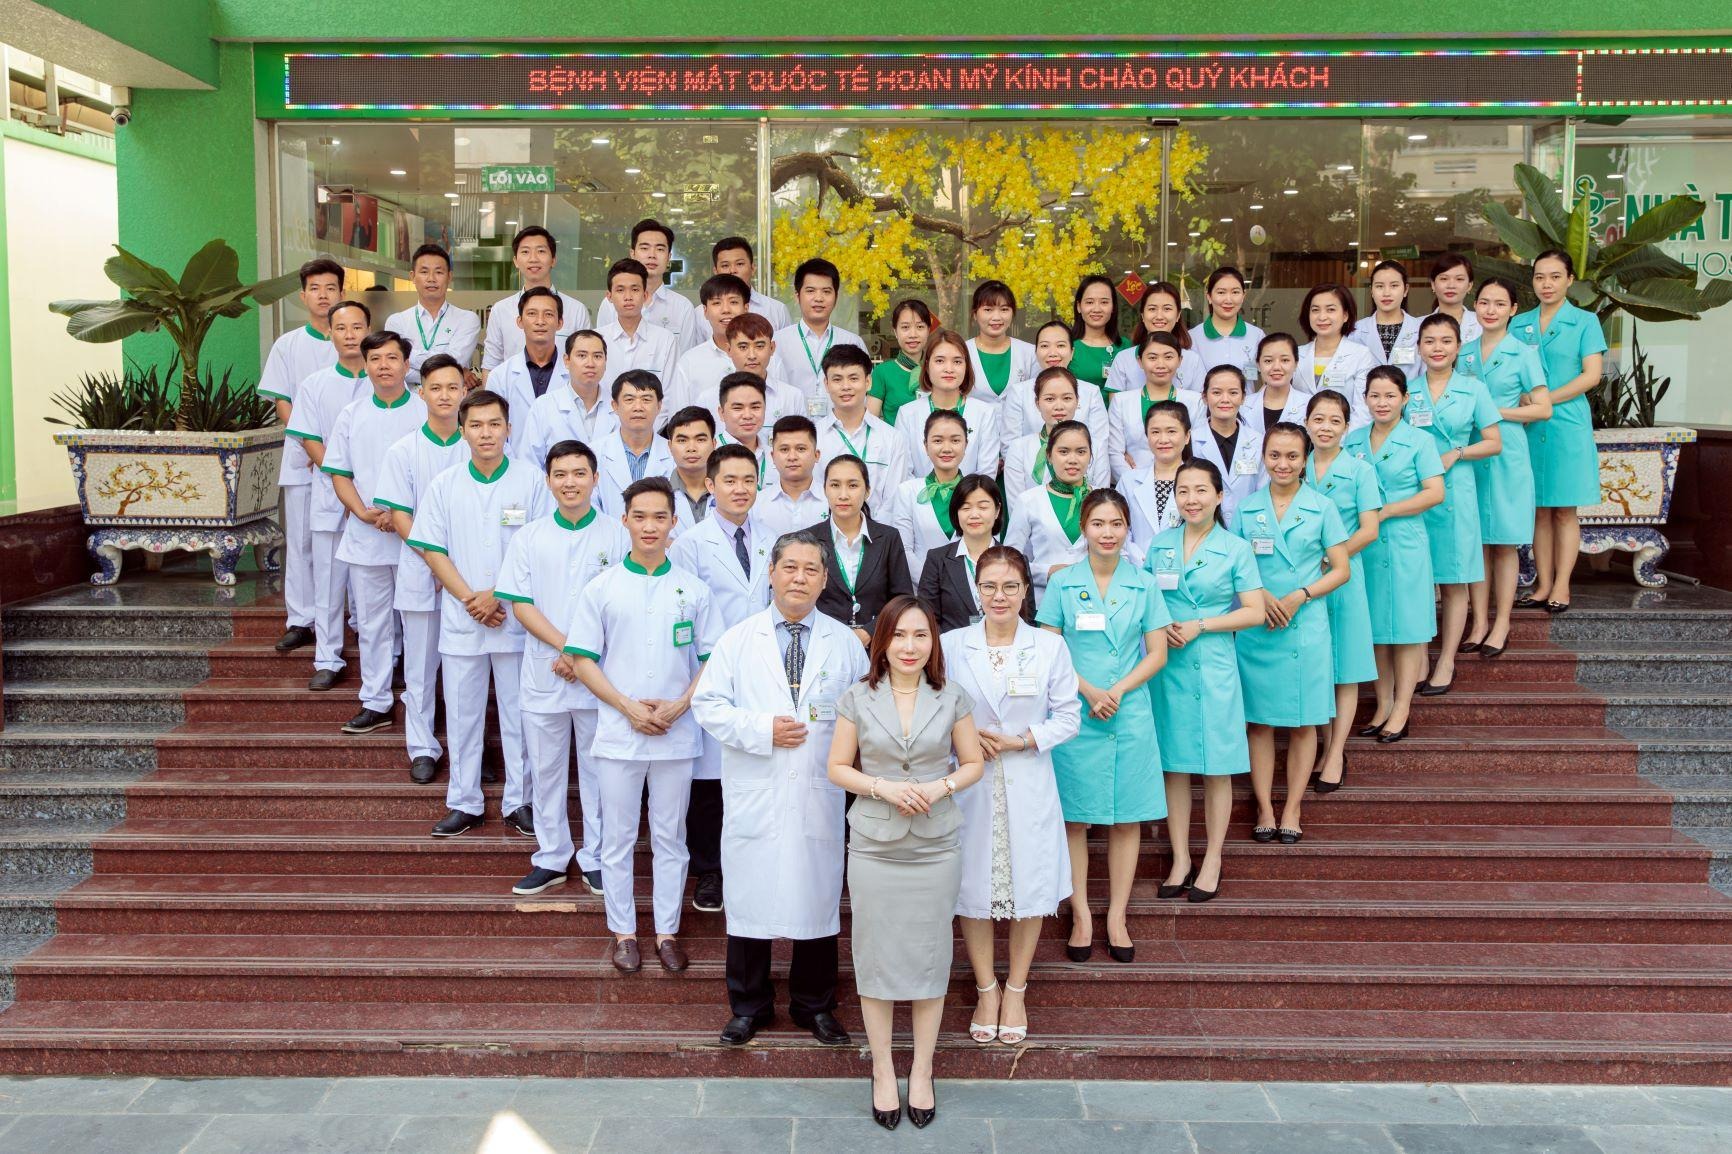 Hoan My Saigon International Eye Hospital